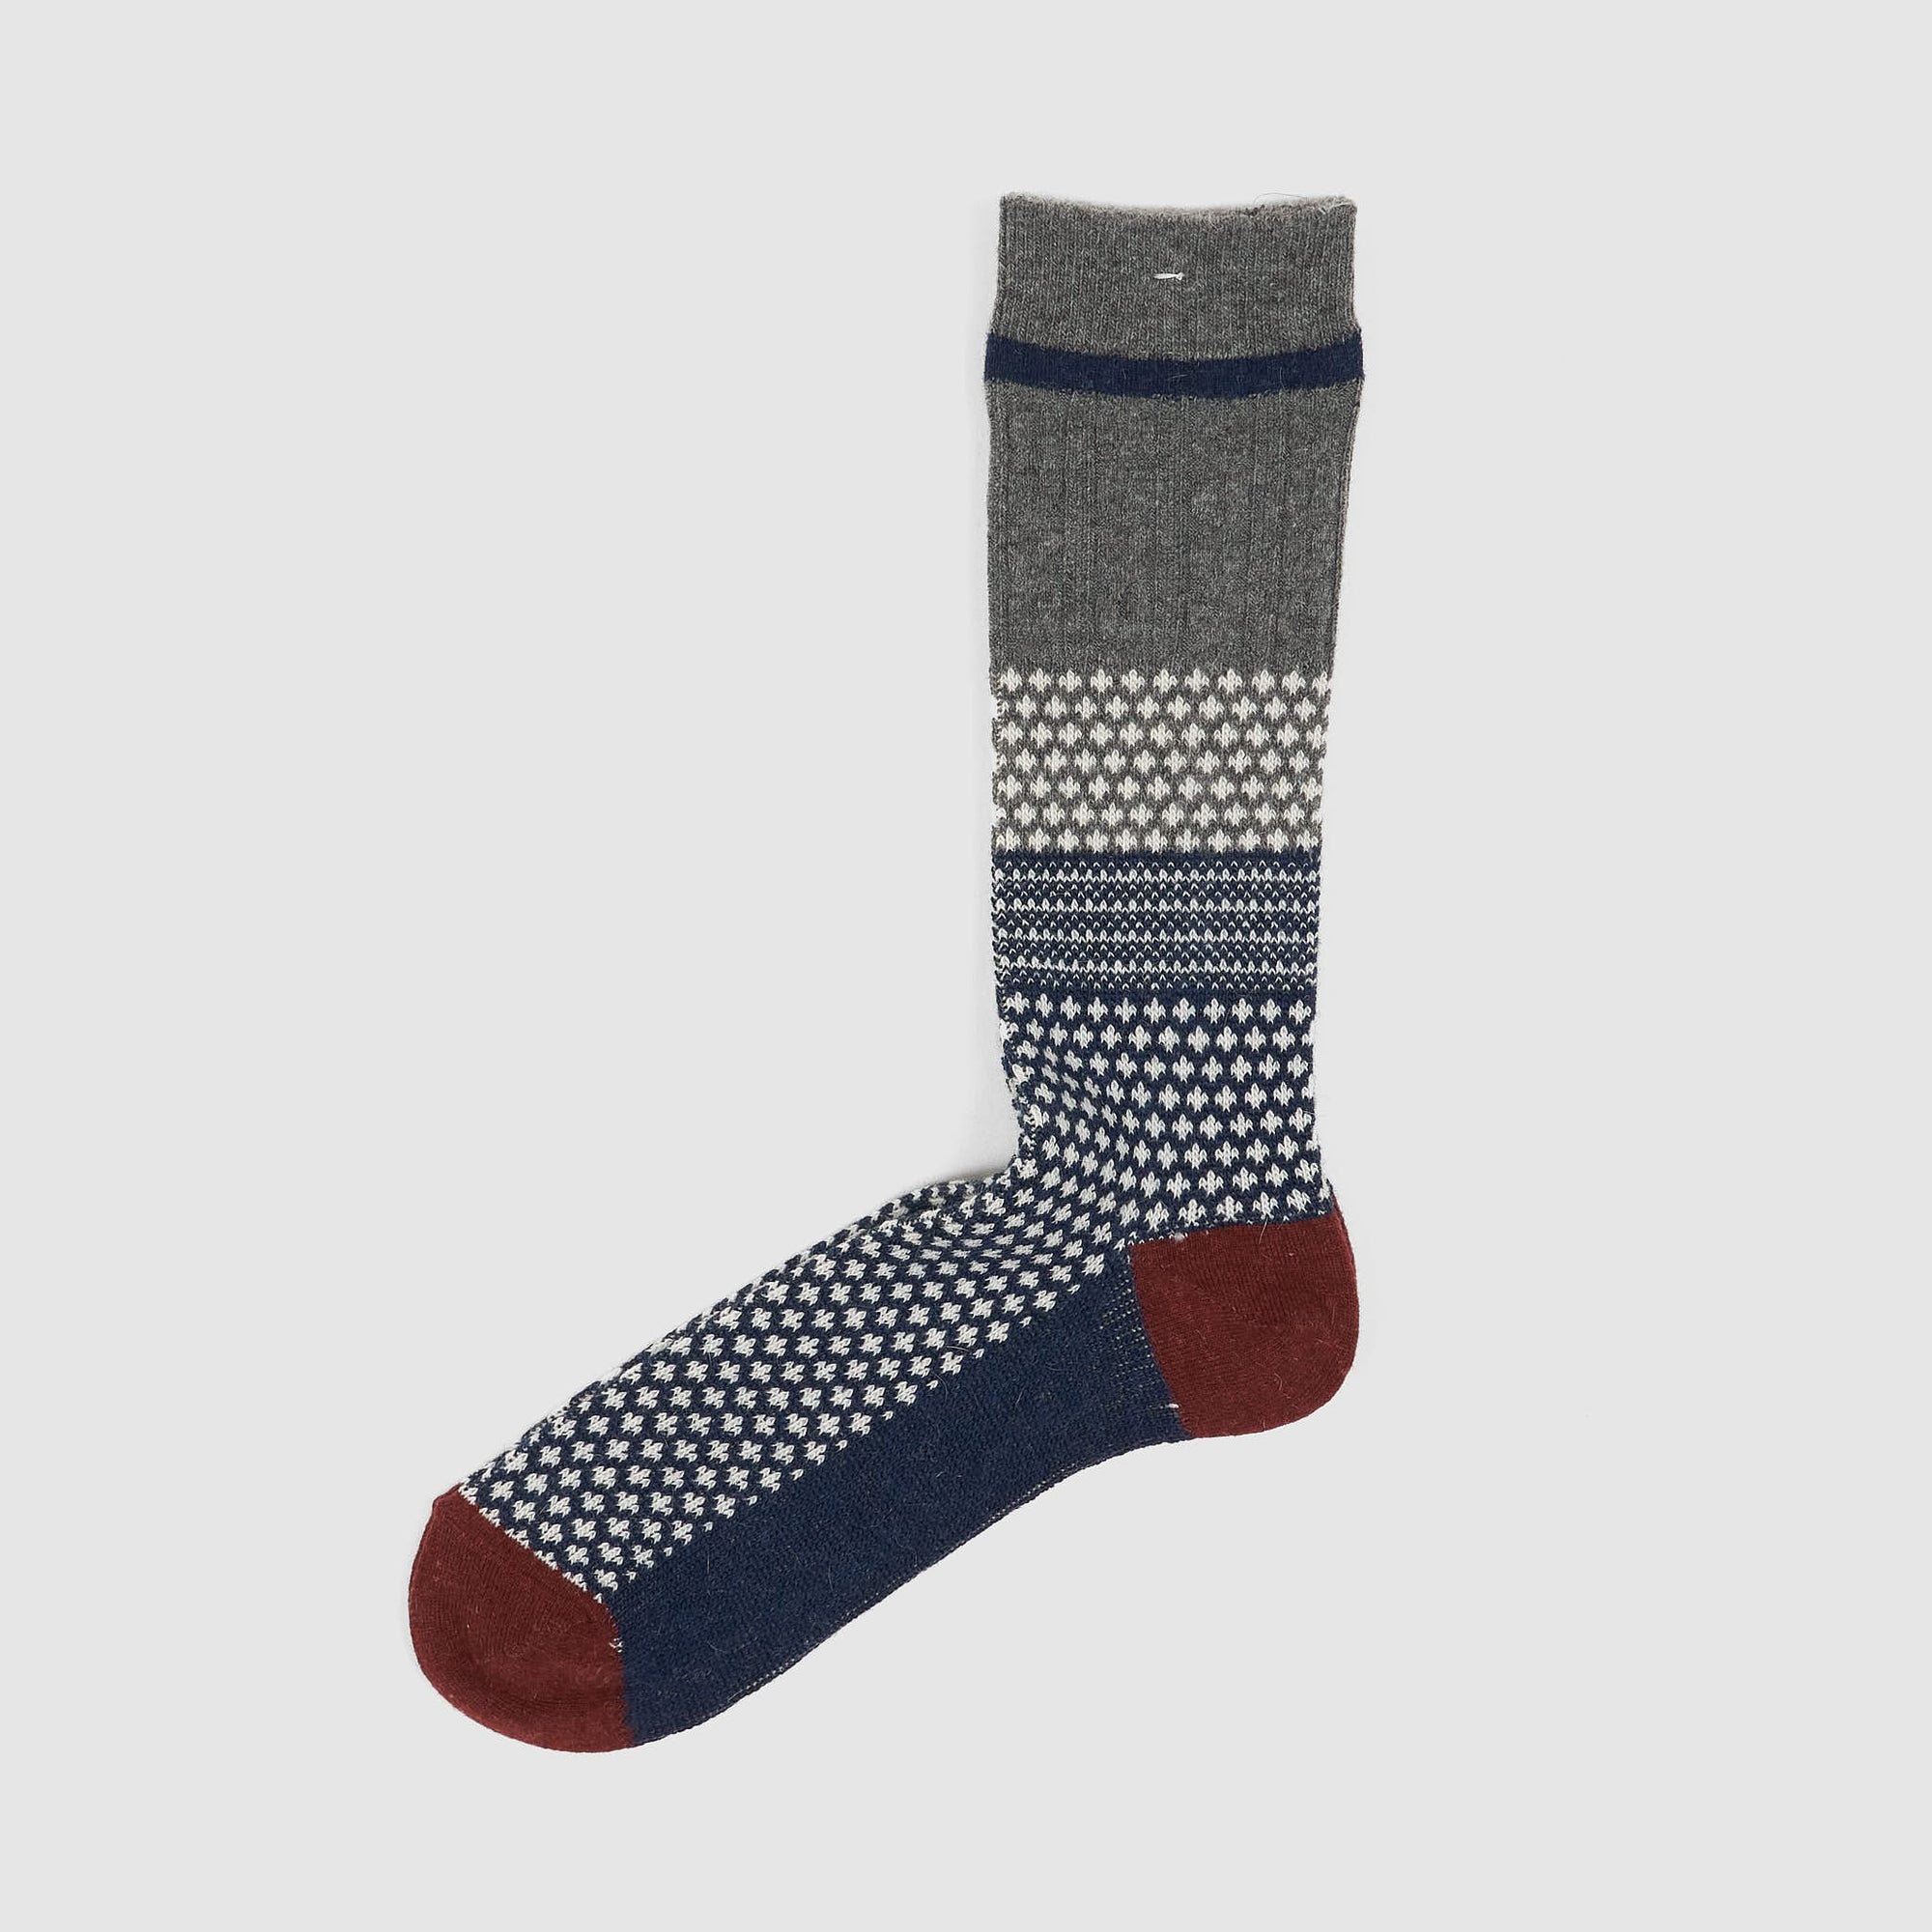 Kapital Capital Smiley Heel Hold Socks 6colors Made in Japan New